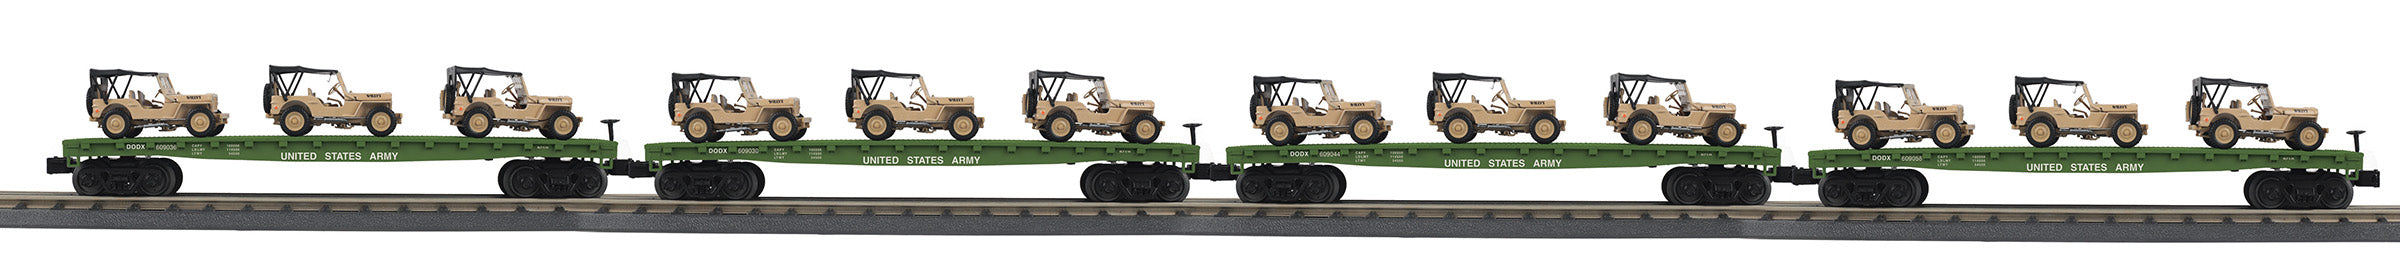 MTH 30-70124 - Flat Car "U.S. Army" w/(3) Willy’s Transport Vehicles (4-Car) Desert